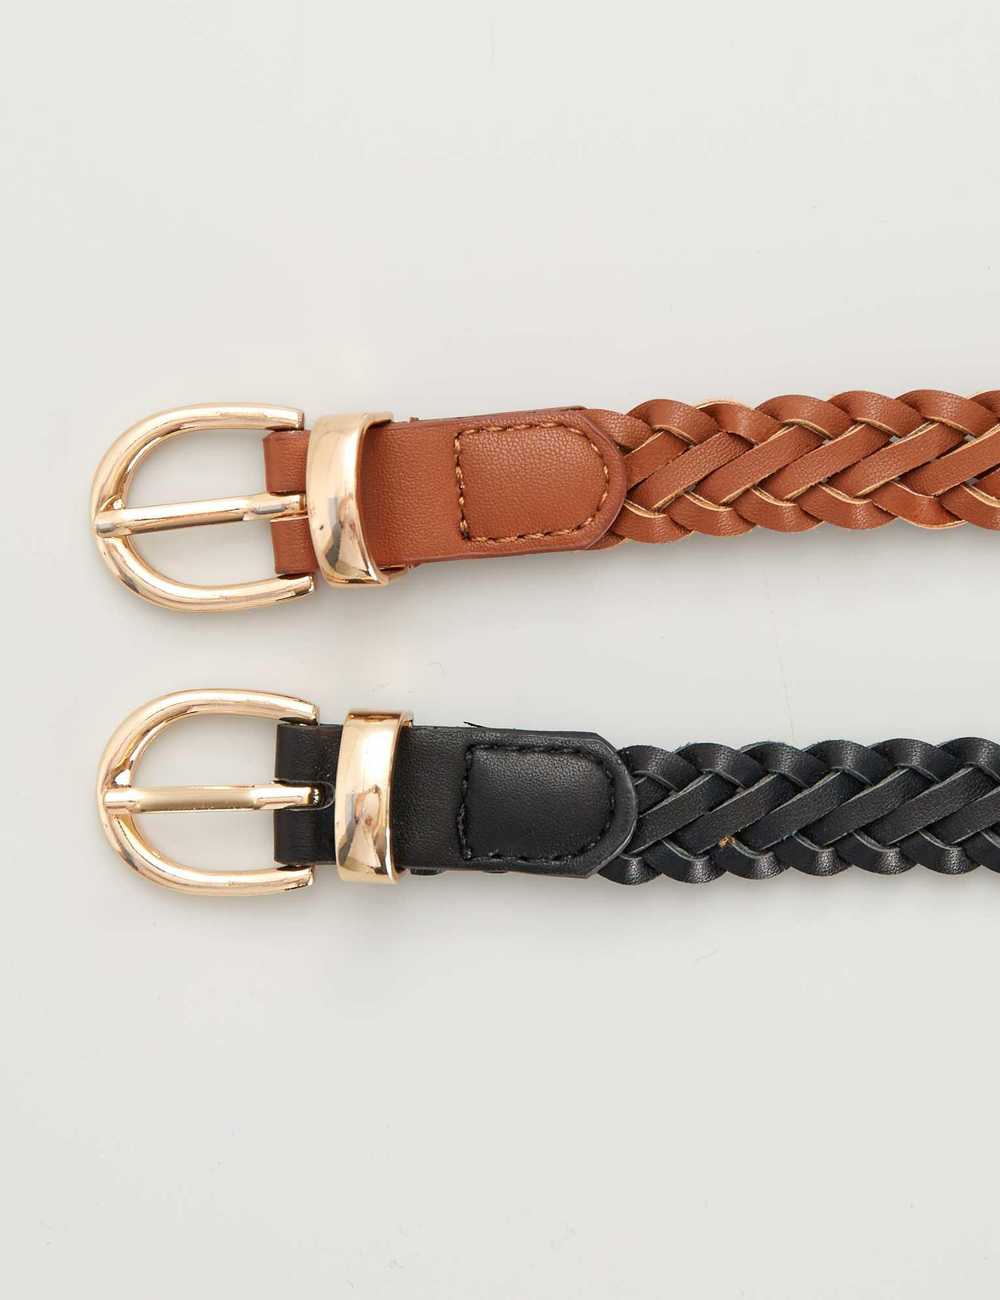 Buy Braided belts - Pack of 2 Online in Dubai & the UAE